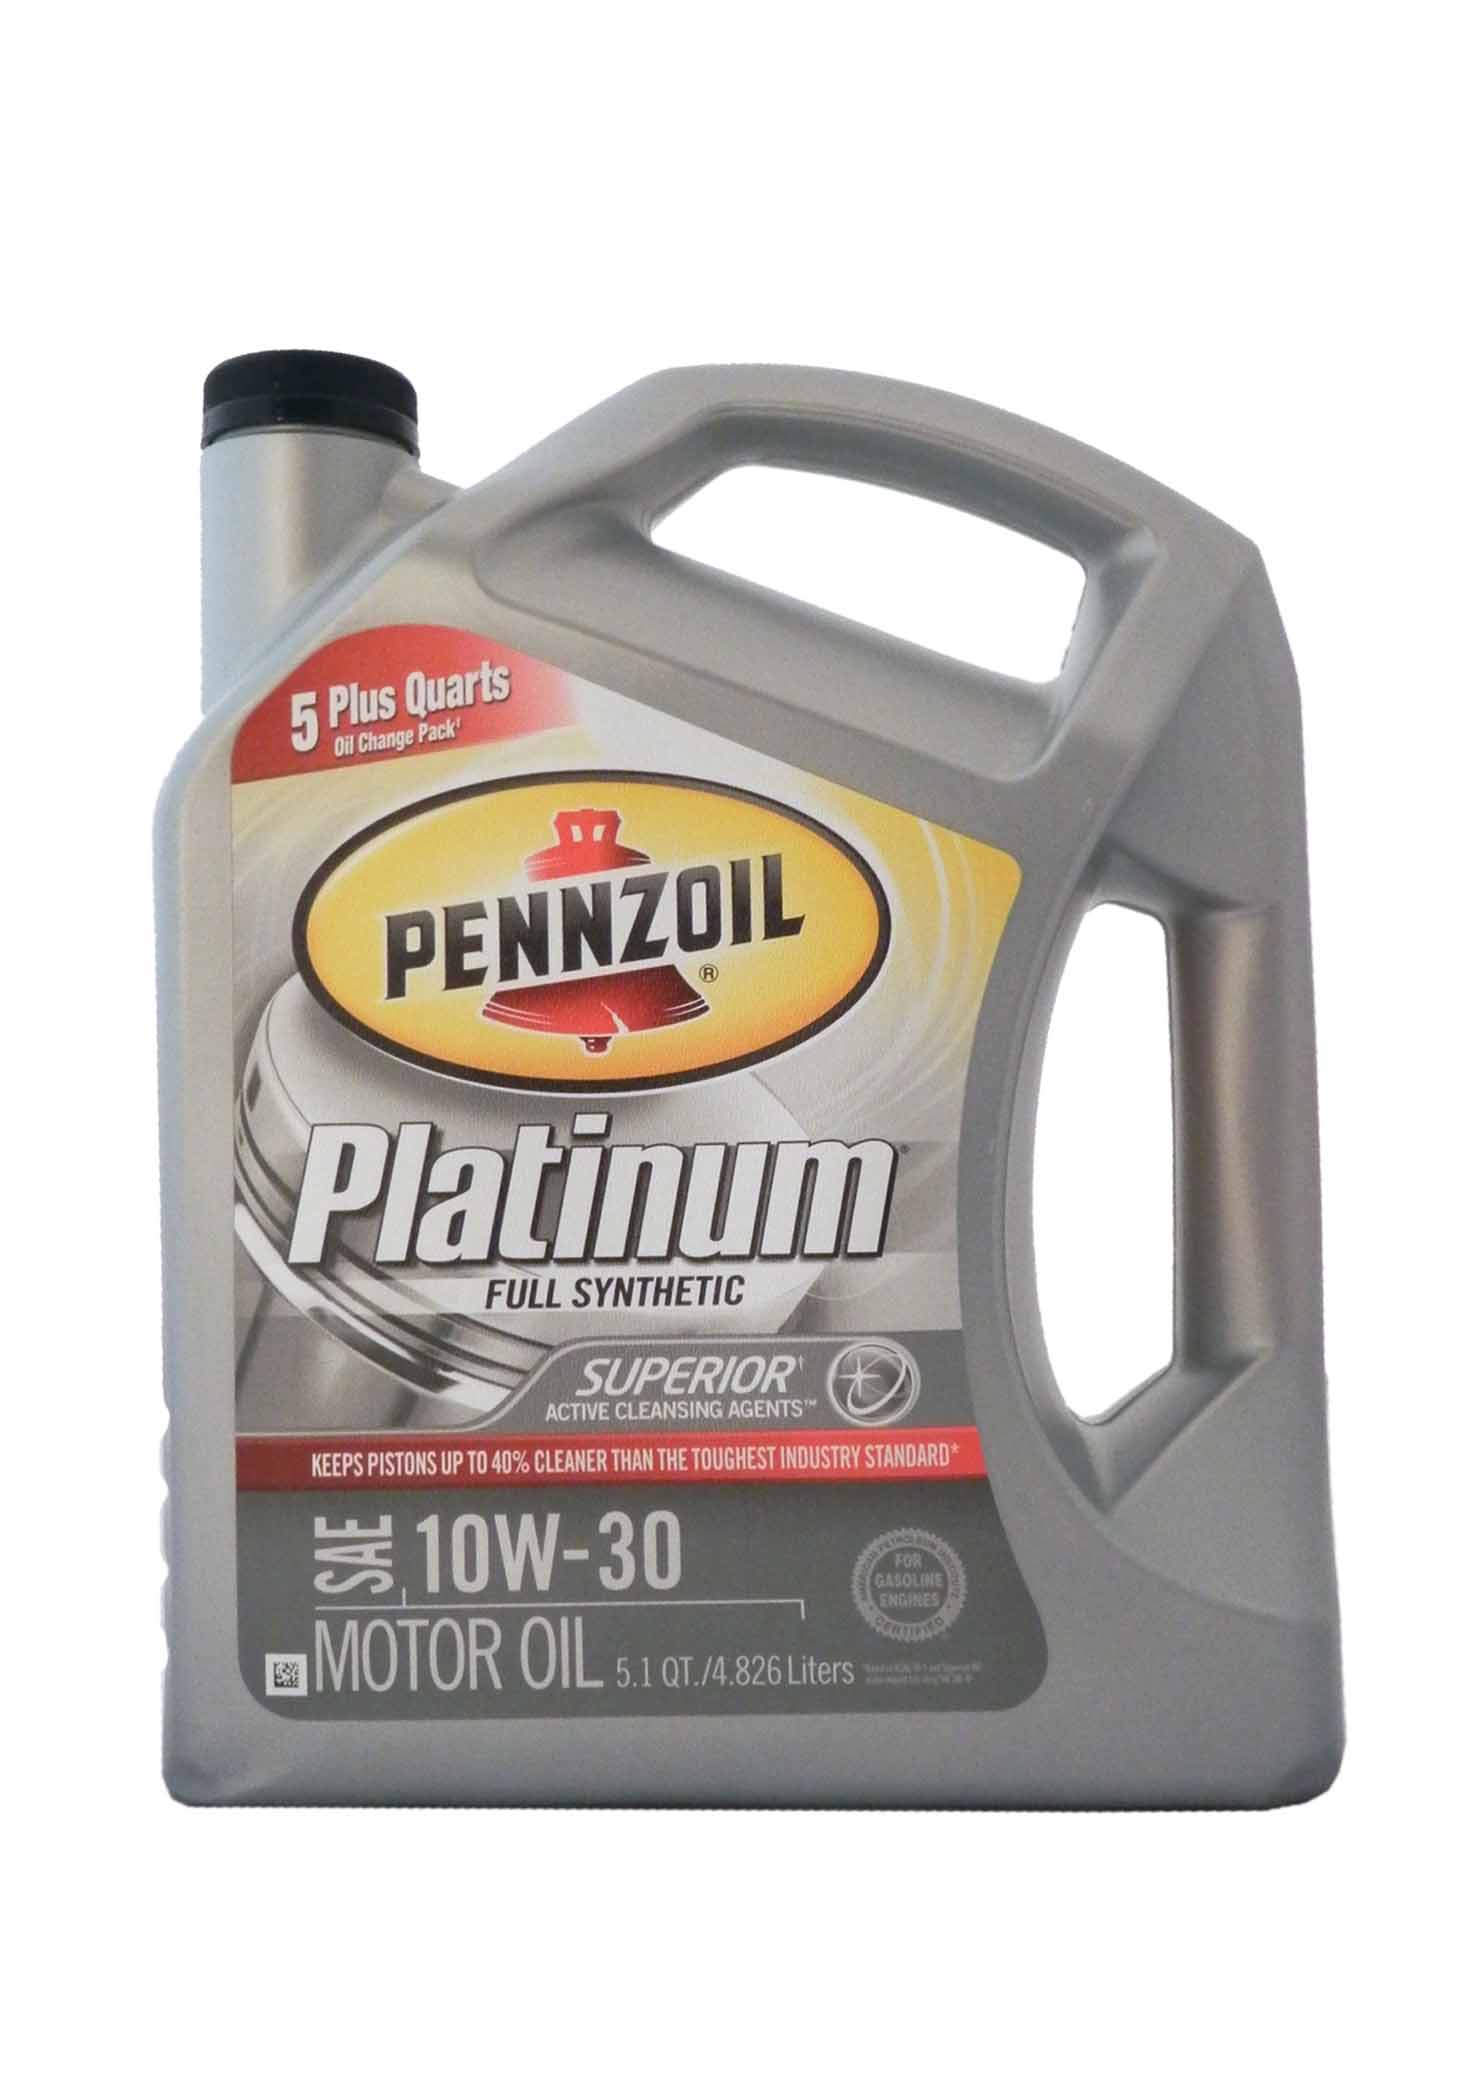 Pennzoil Platinum SAE 10W-30 Full Synthetic